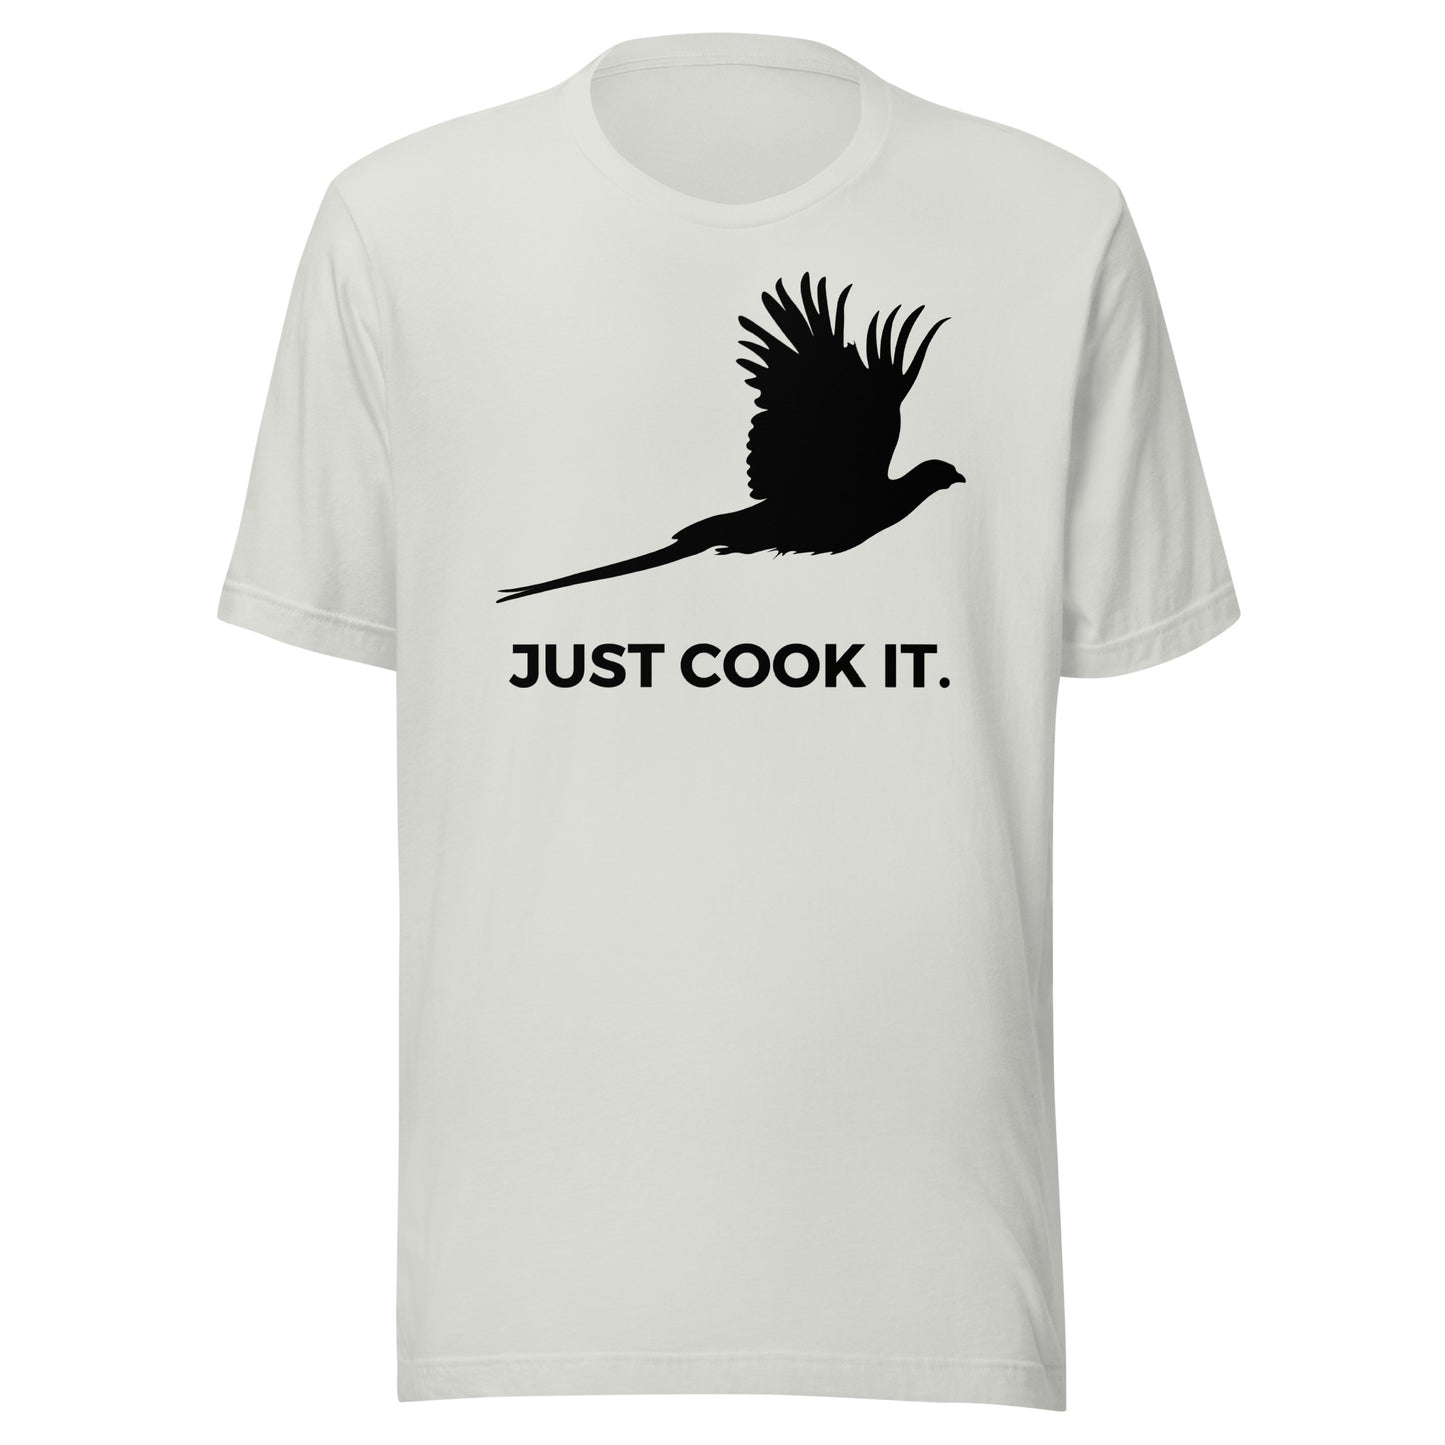 Just Cook It - Unisex t-shirt